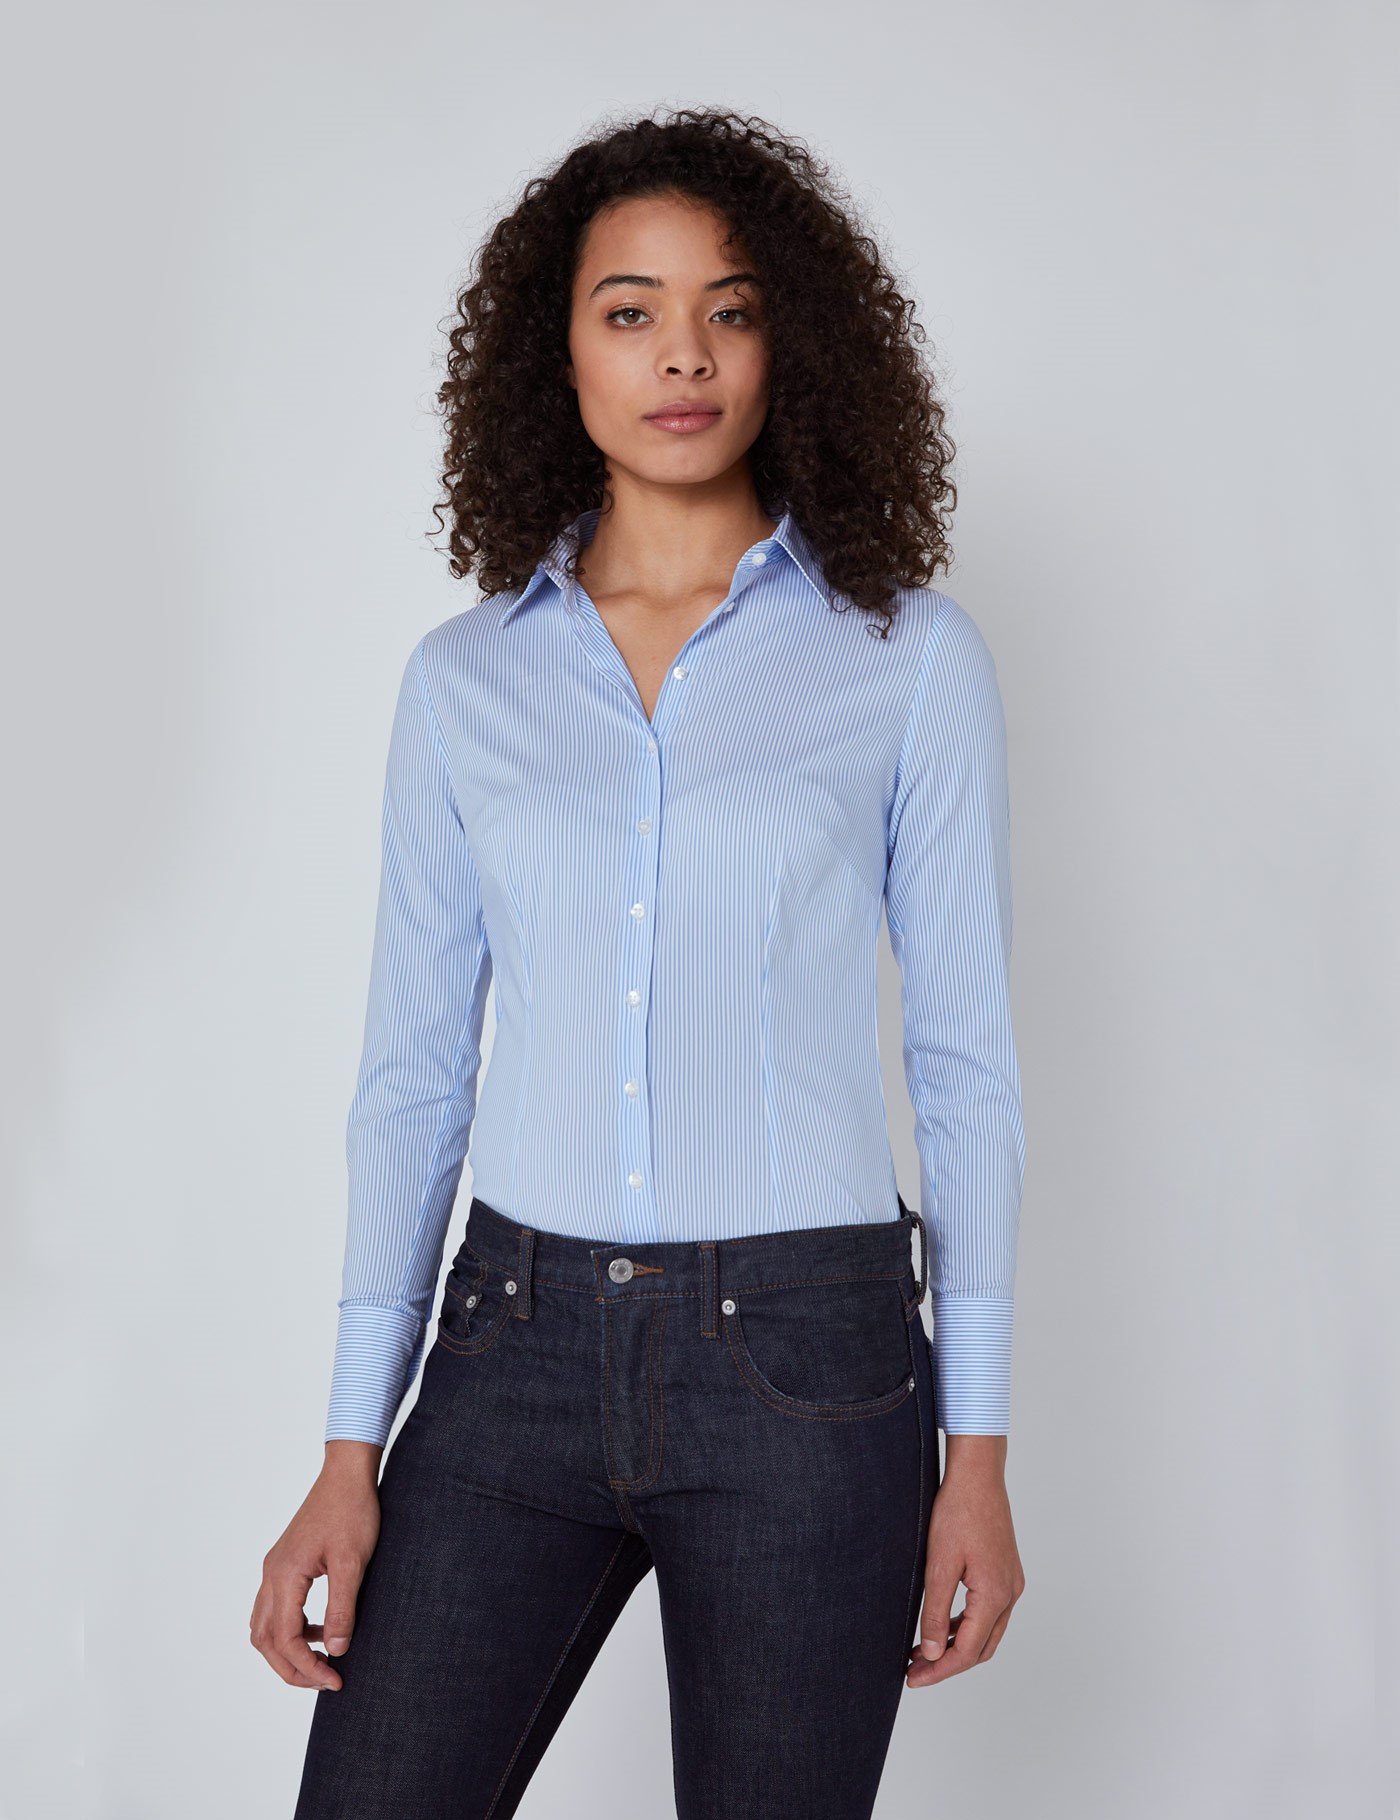 Women's Blue & White Stripes Luxury Cotton Nylon Fitted Shirt